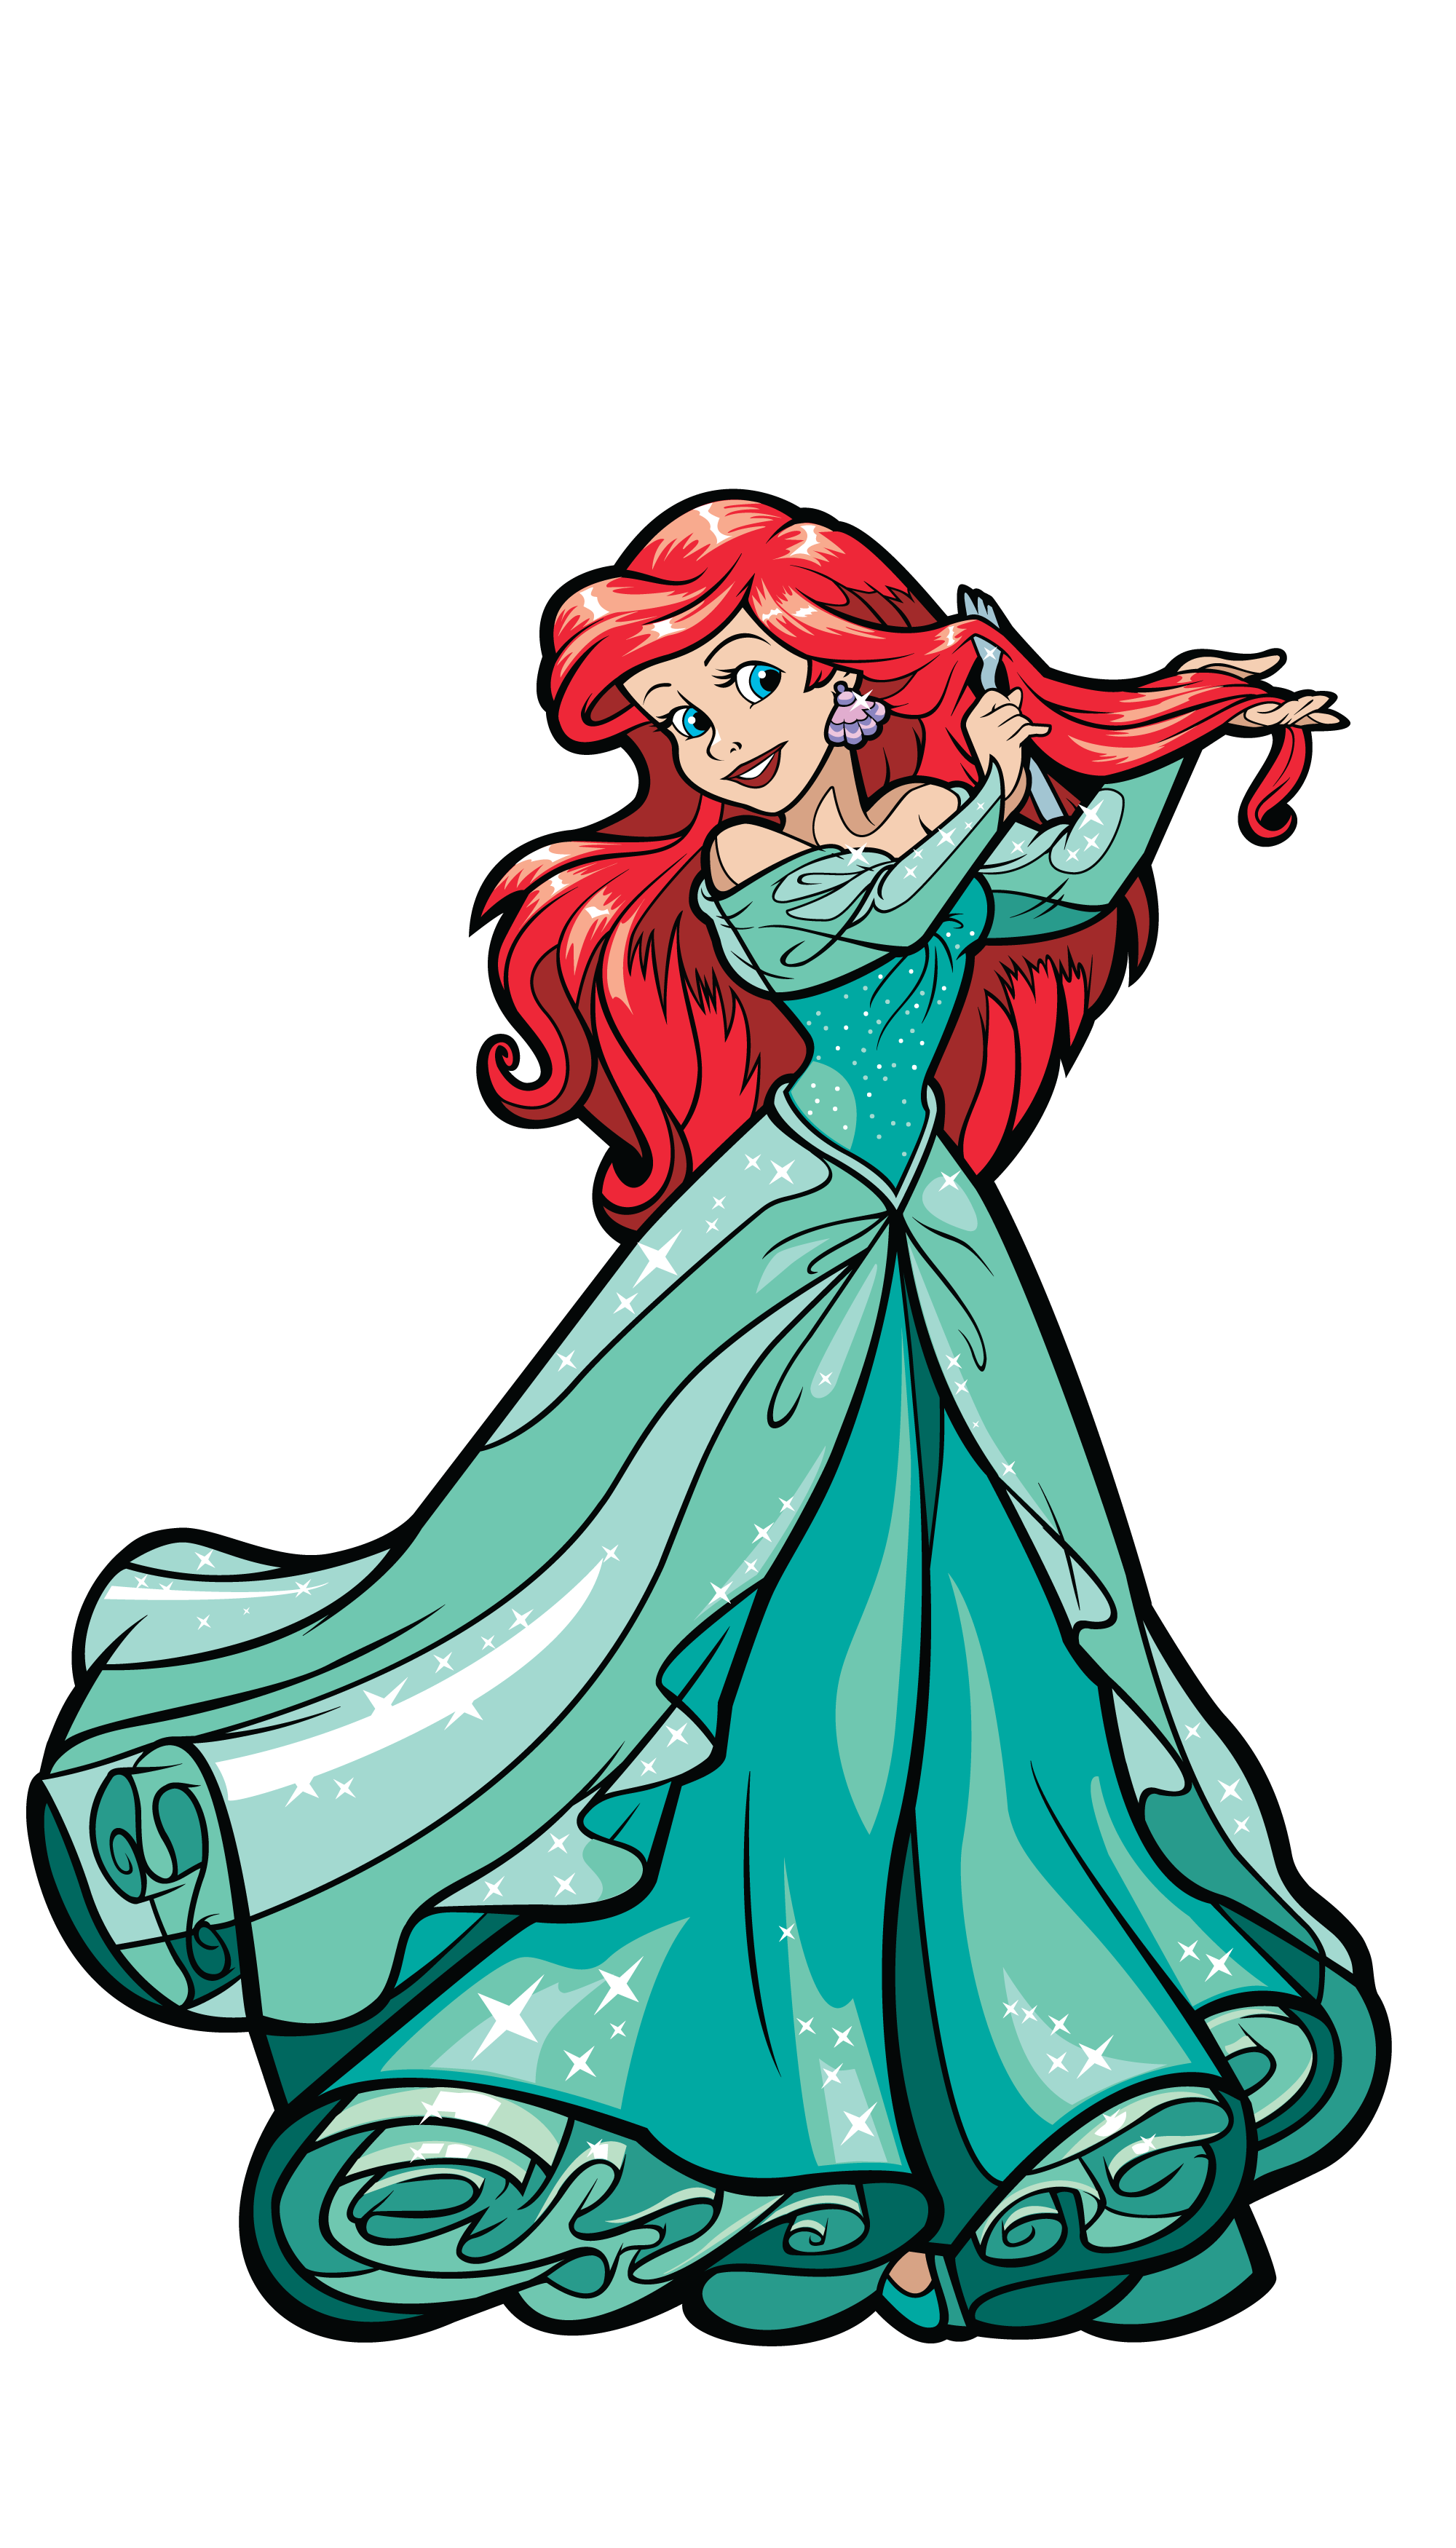 Ariel (225)